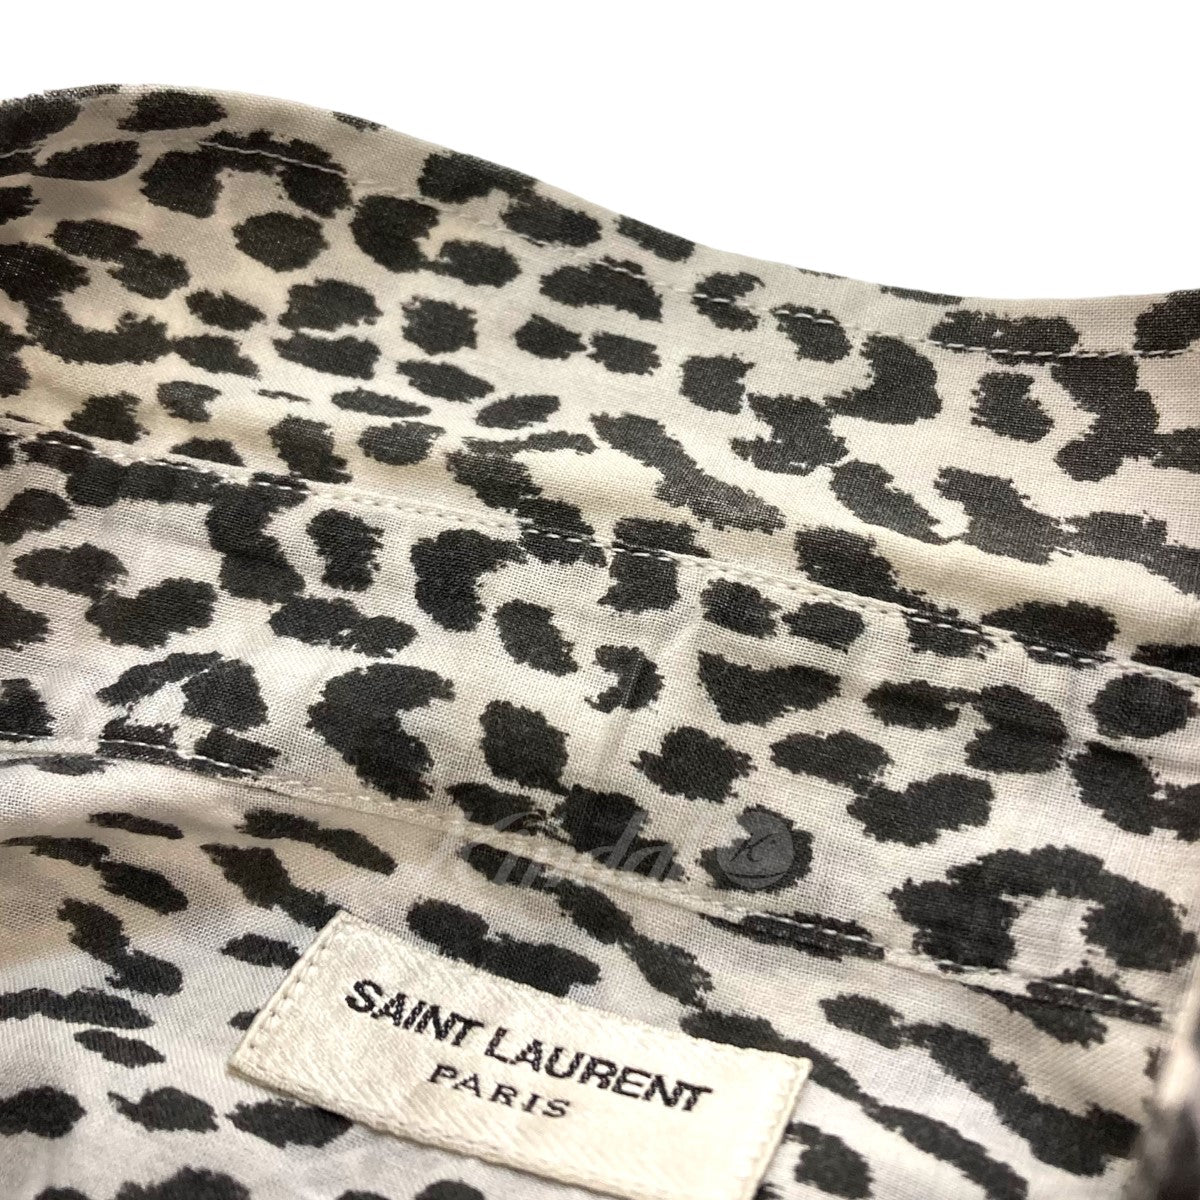 SAINT LAURENT PARIS(サンローランパリ) ベイビーキャットシャツ ...